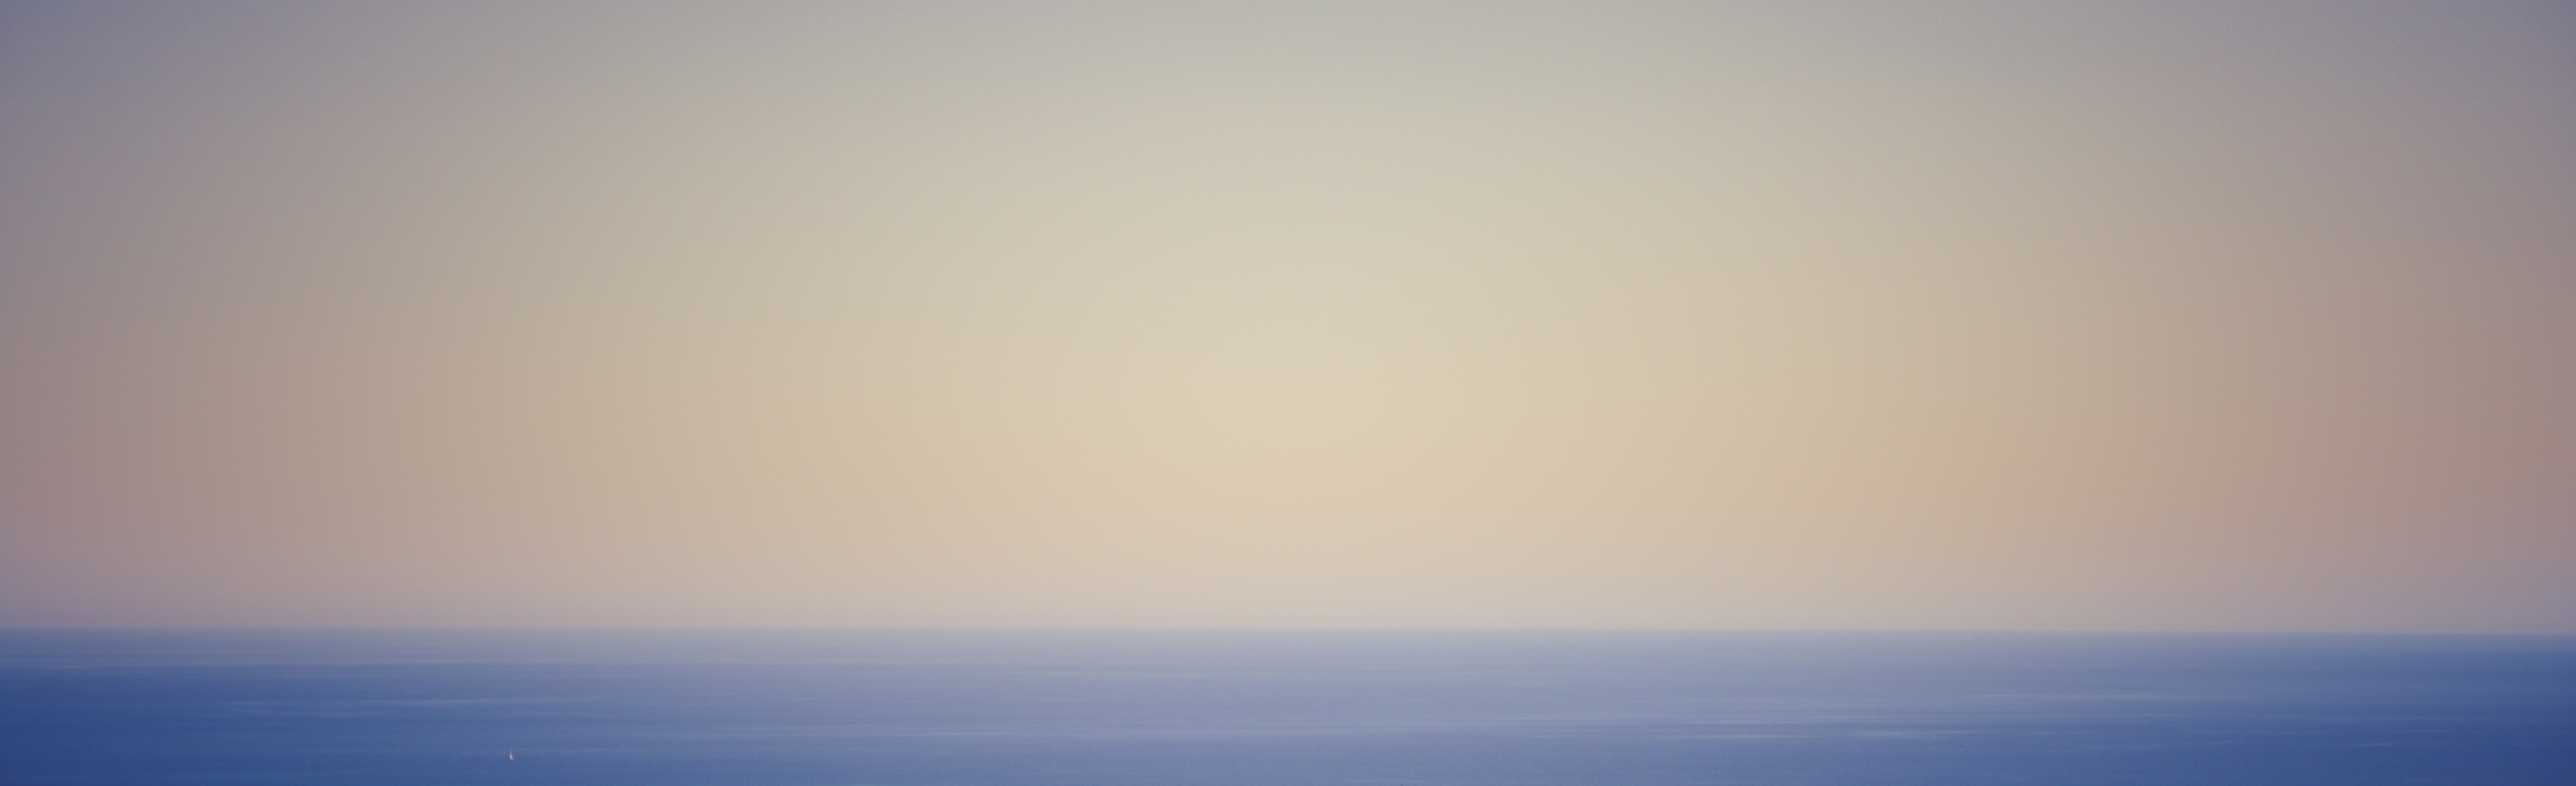 3540x1080 Resolution ocean, horizon, sky 3540x1080 Resolution Wallpaper ...